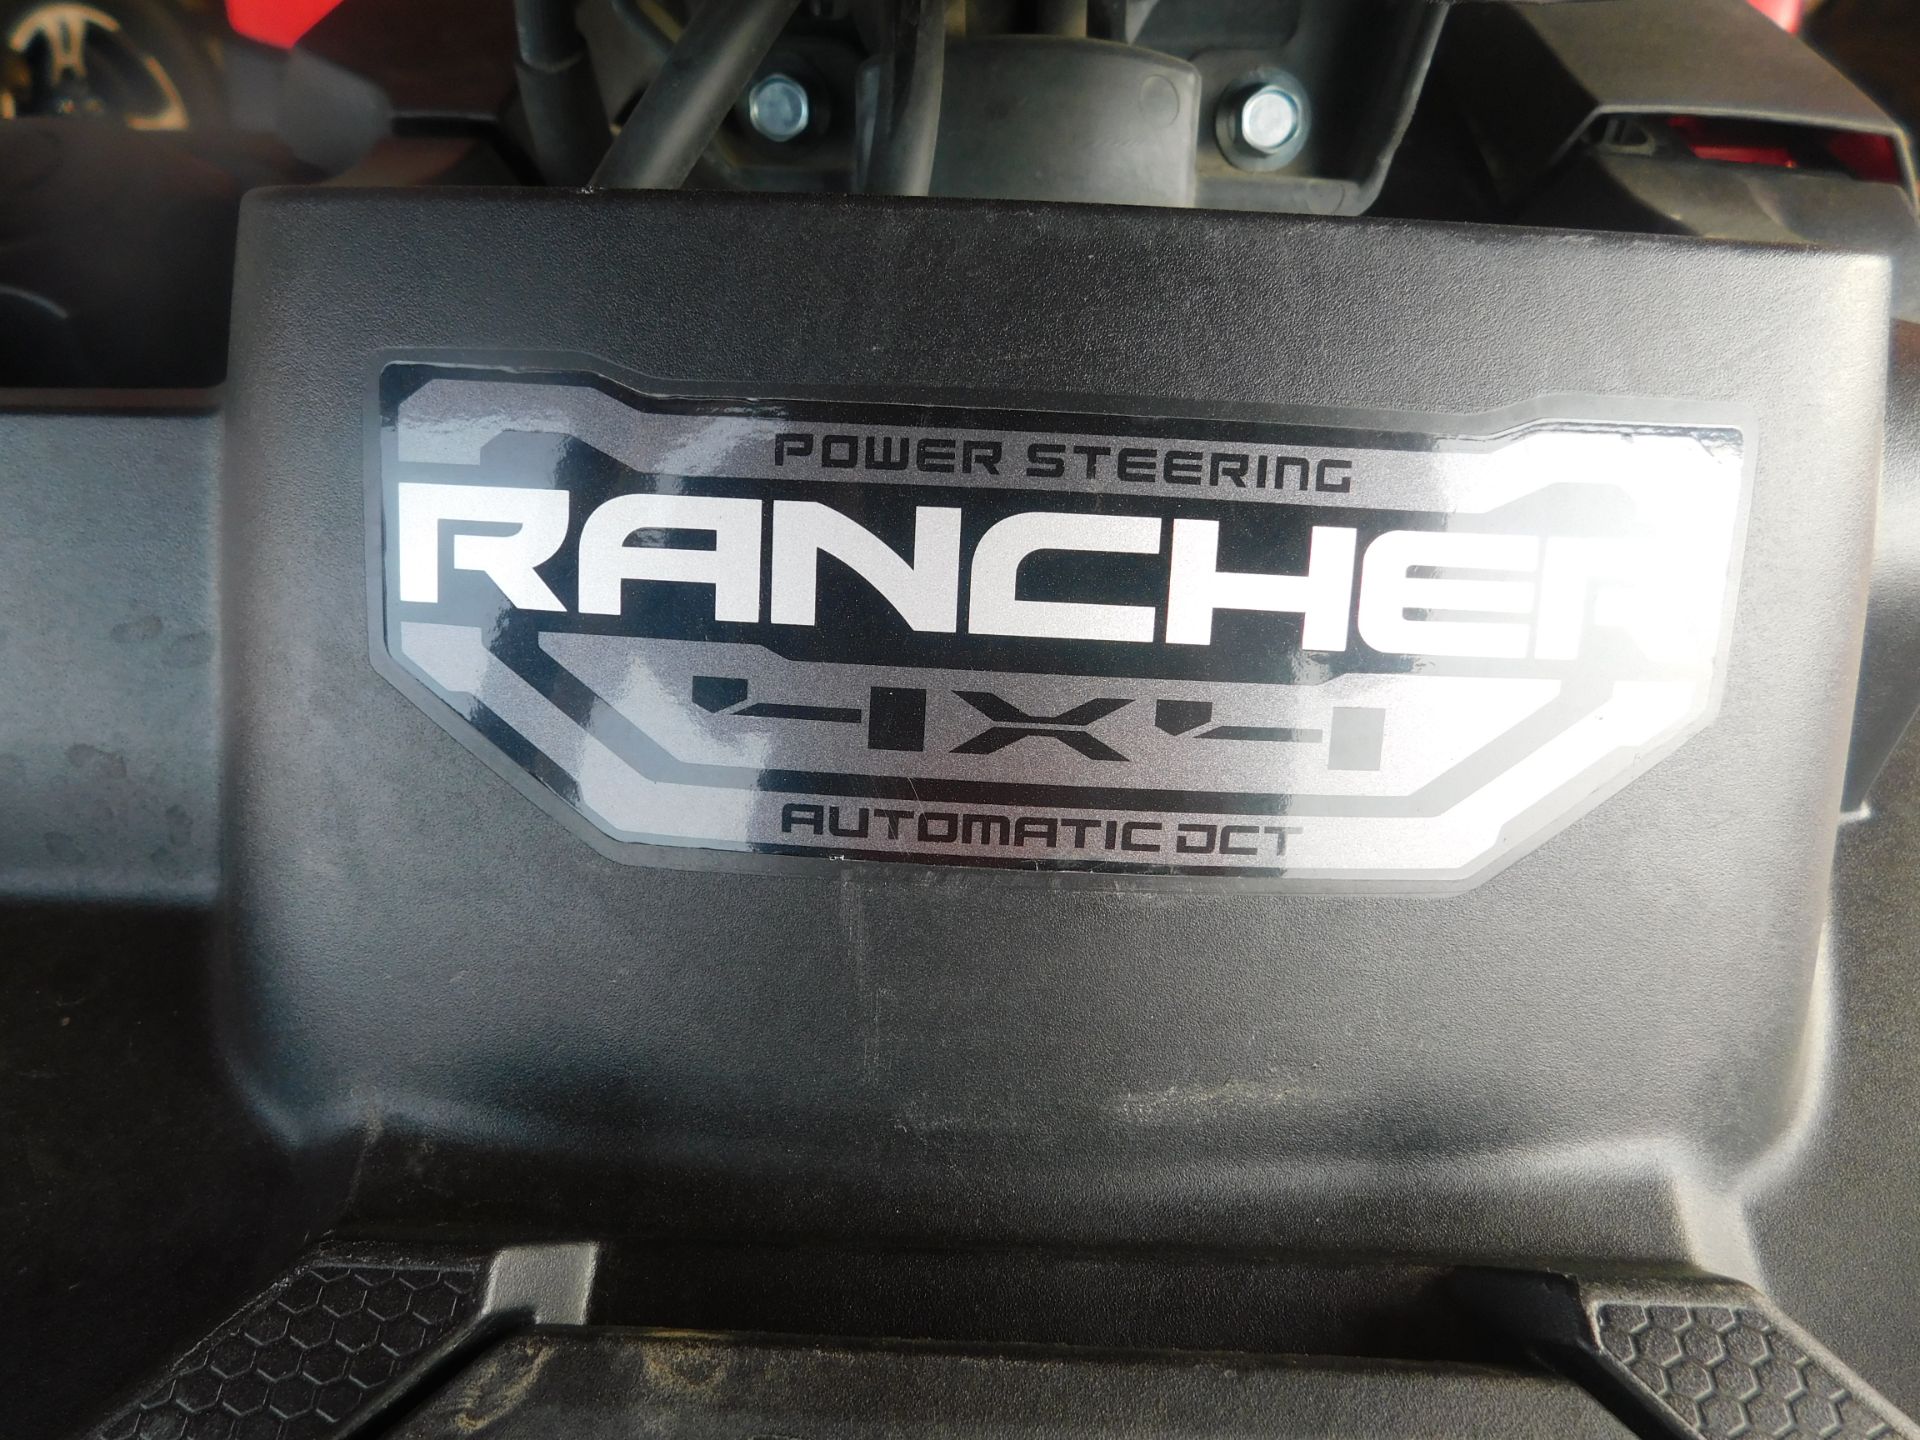 2020 Honda FourTrax Rancher 4x4 Automatic DCT EPS in Sauk Rapids, Minnesota - Photo 10